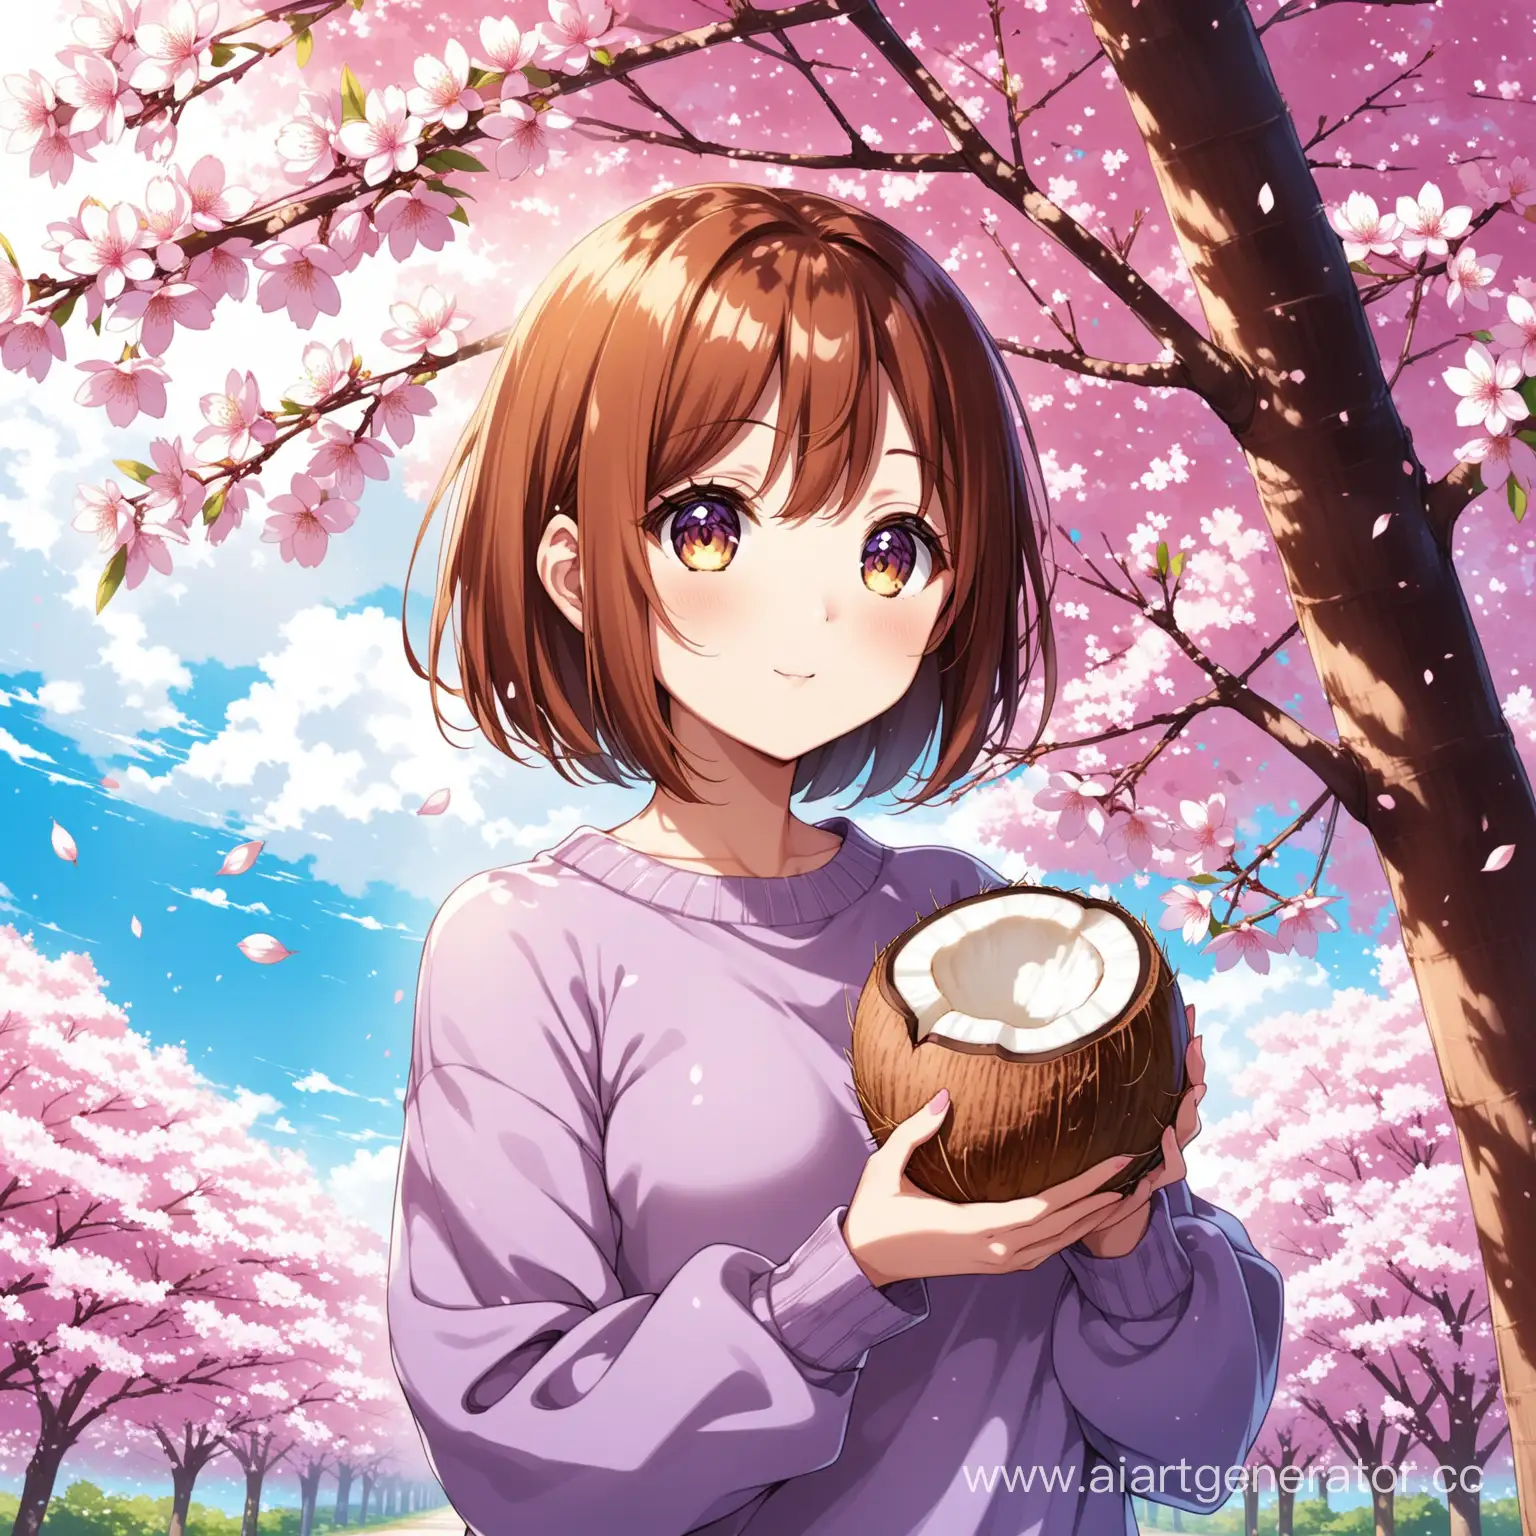 Anime-Girl-Enjoying-Sakura-Blossoms-with-Coconut